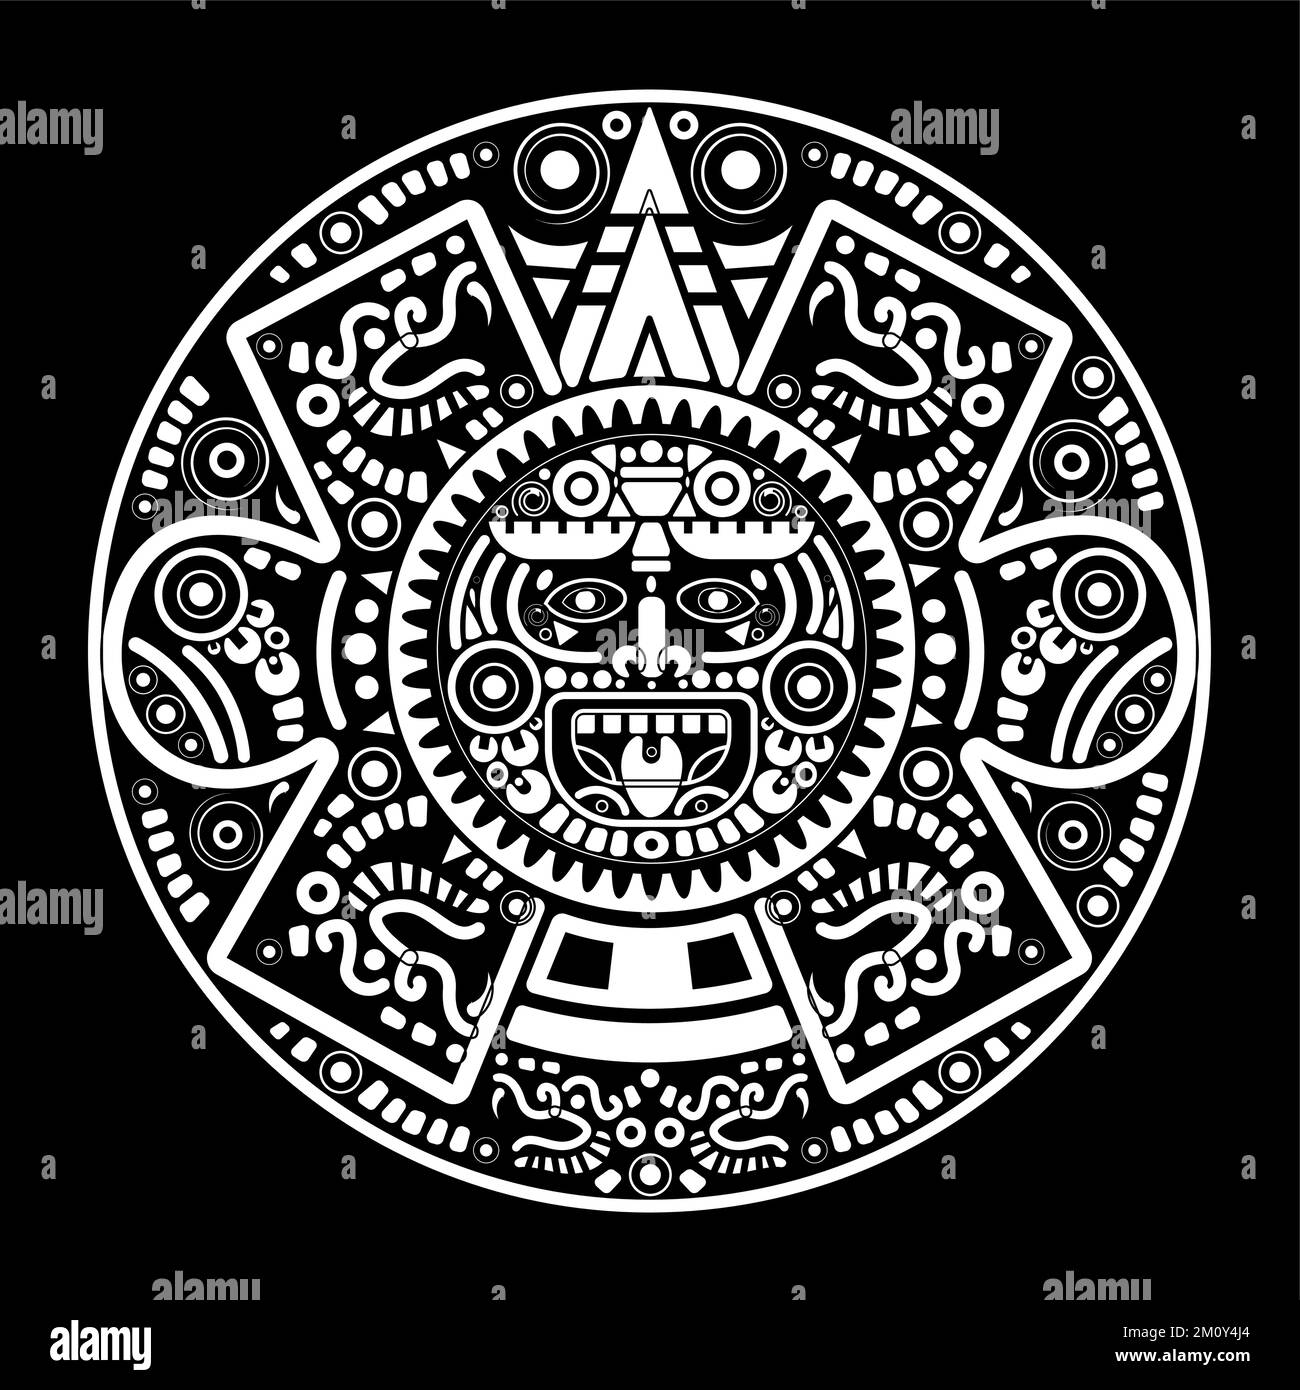 100,000 Aztec symbols Vector Images | Depositphotos